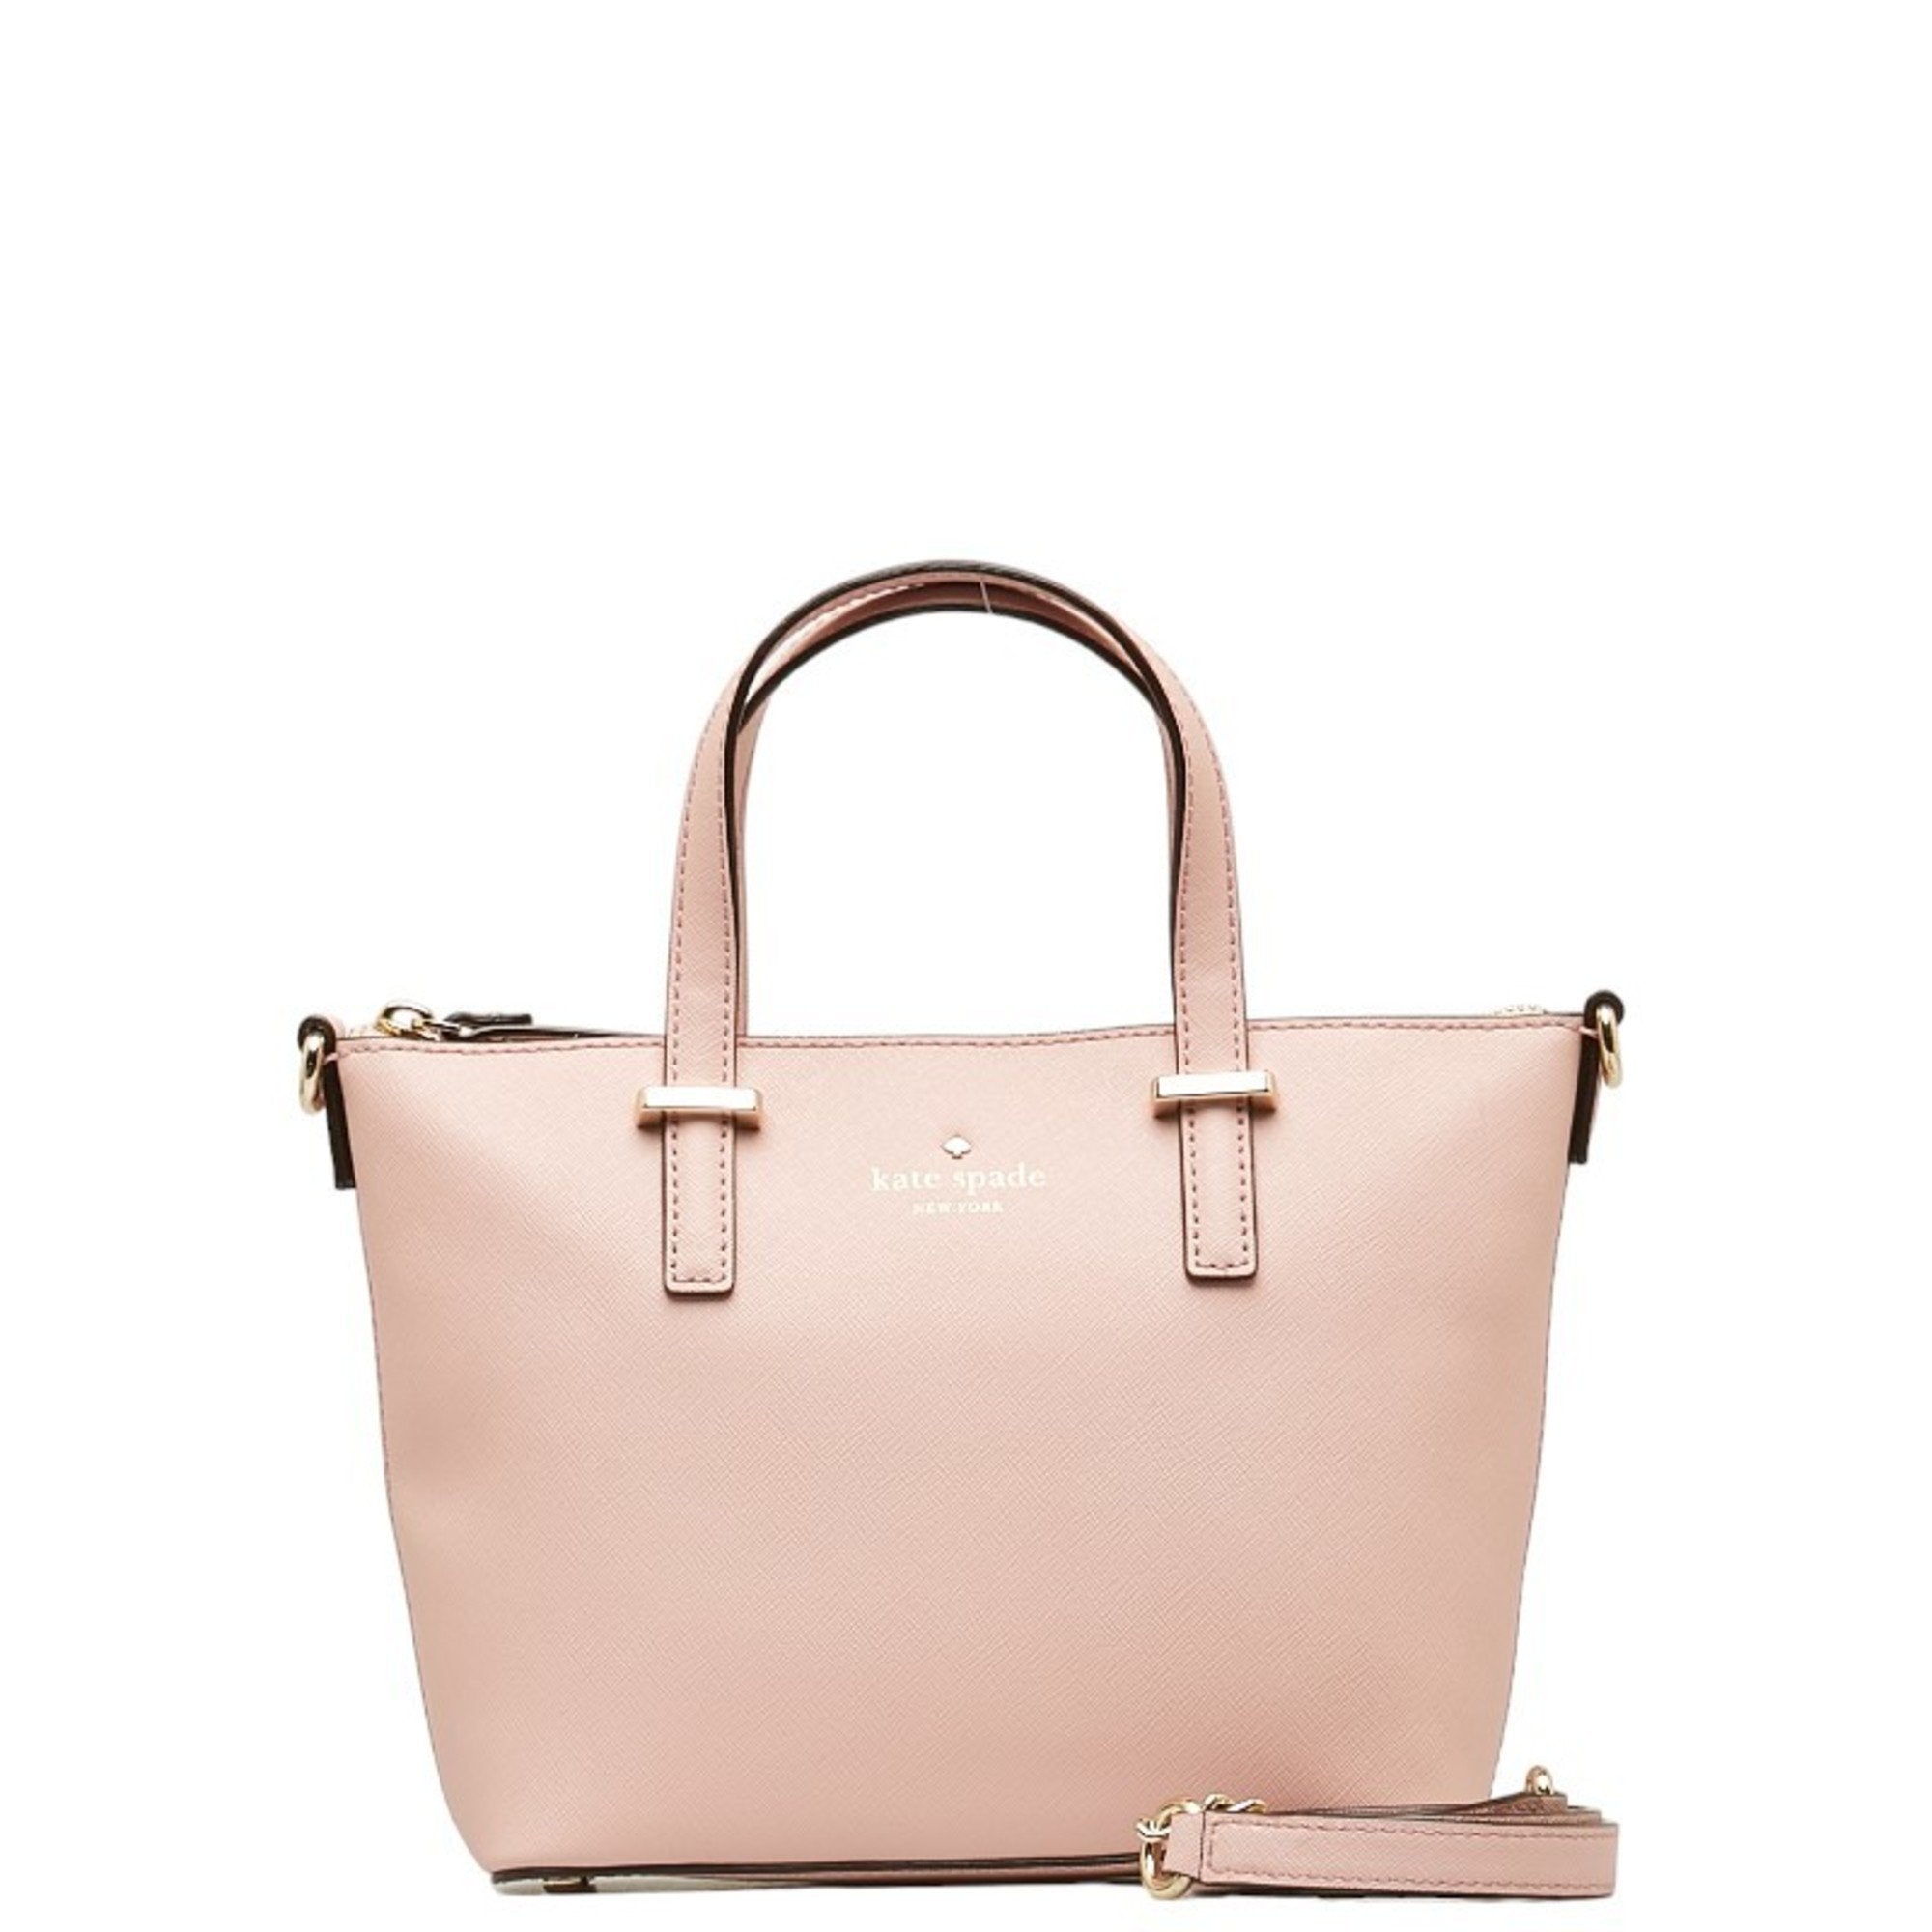 Handbag Shoulder Bag PXRU5975 Pink Leather Ladies